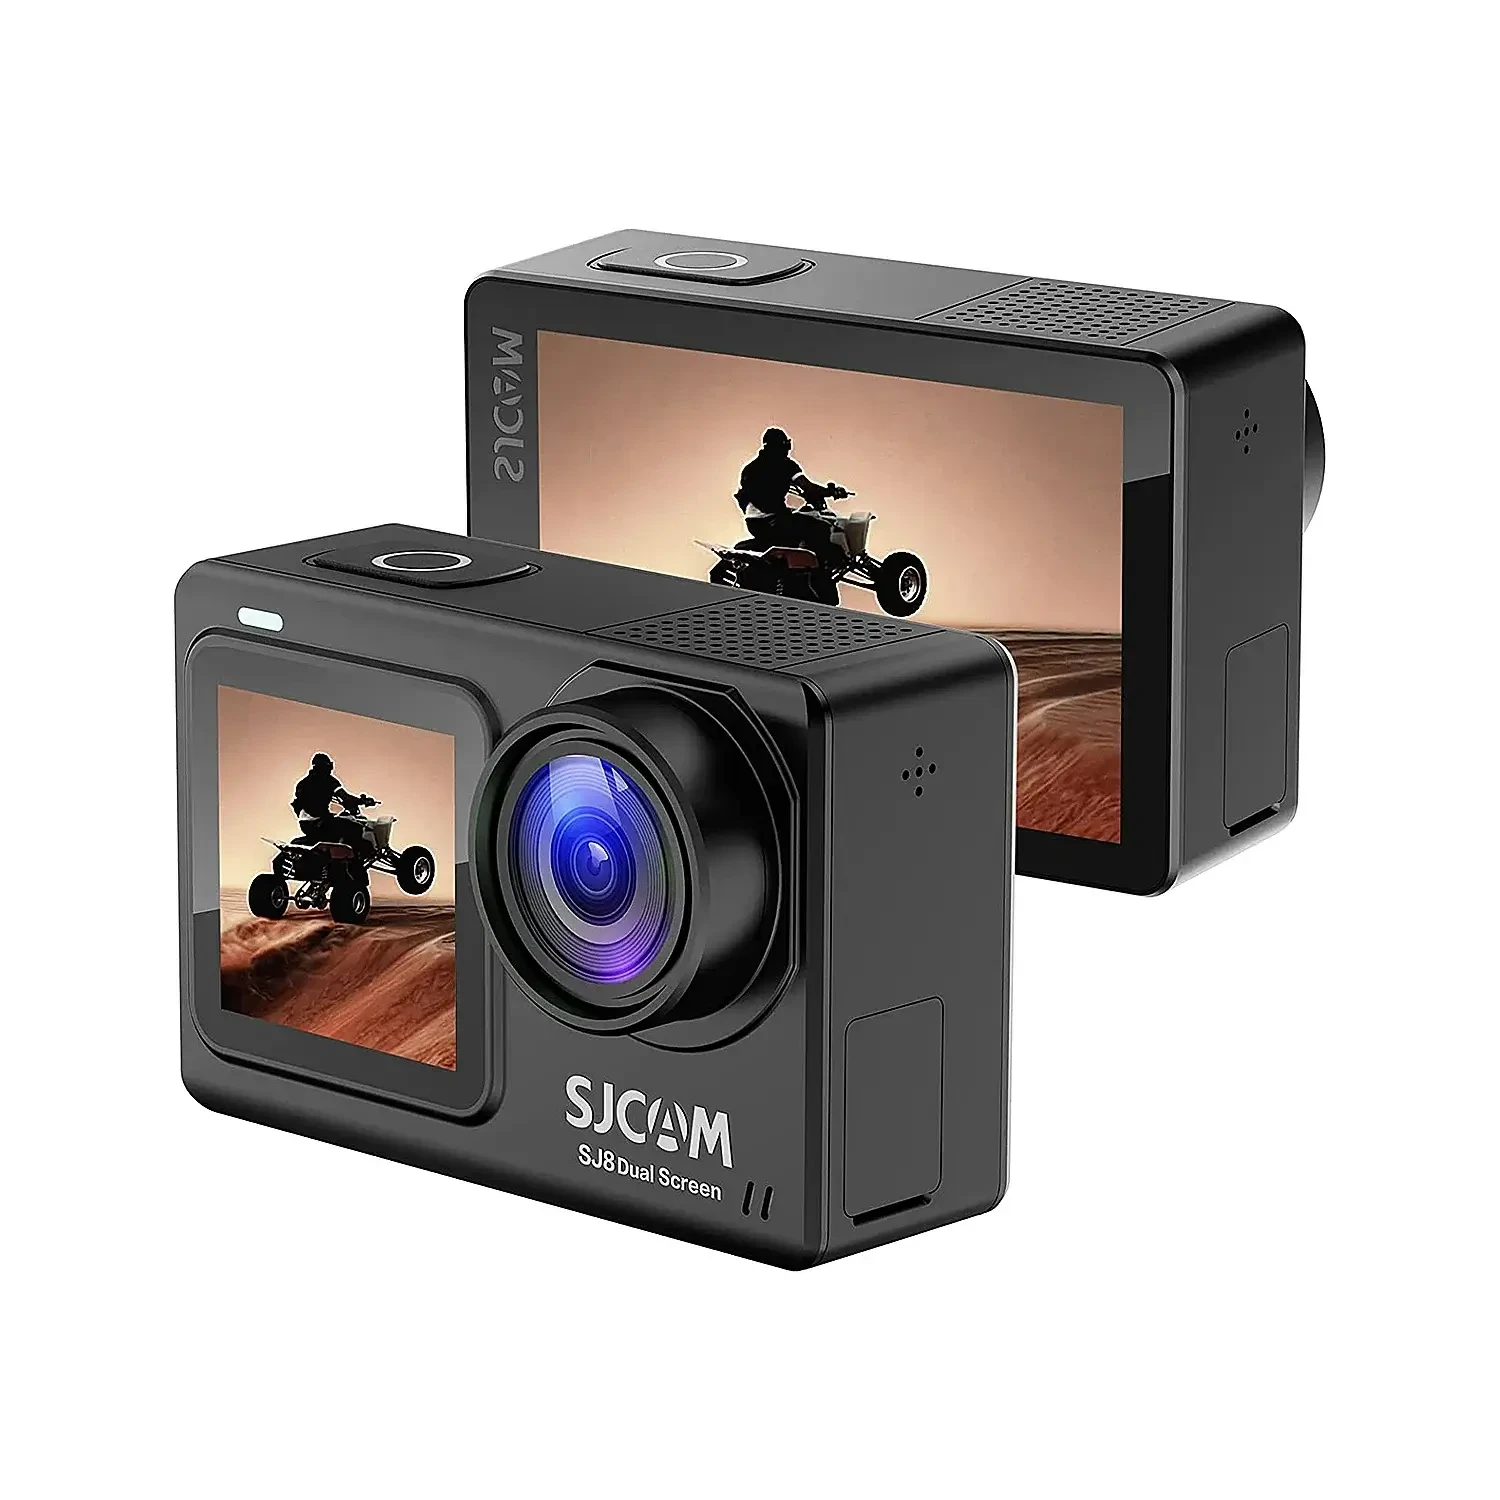 SJCAM SJ6Pro 4K60fps 24MP Dual Screen Action Camera with WiFi, 6